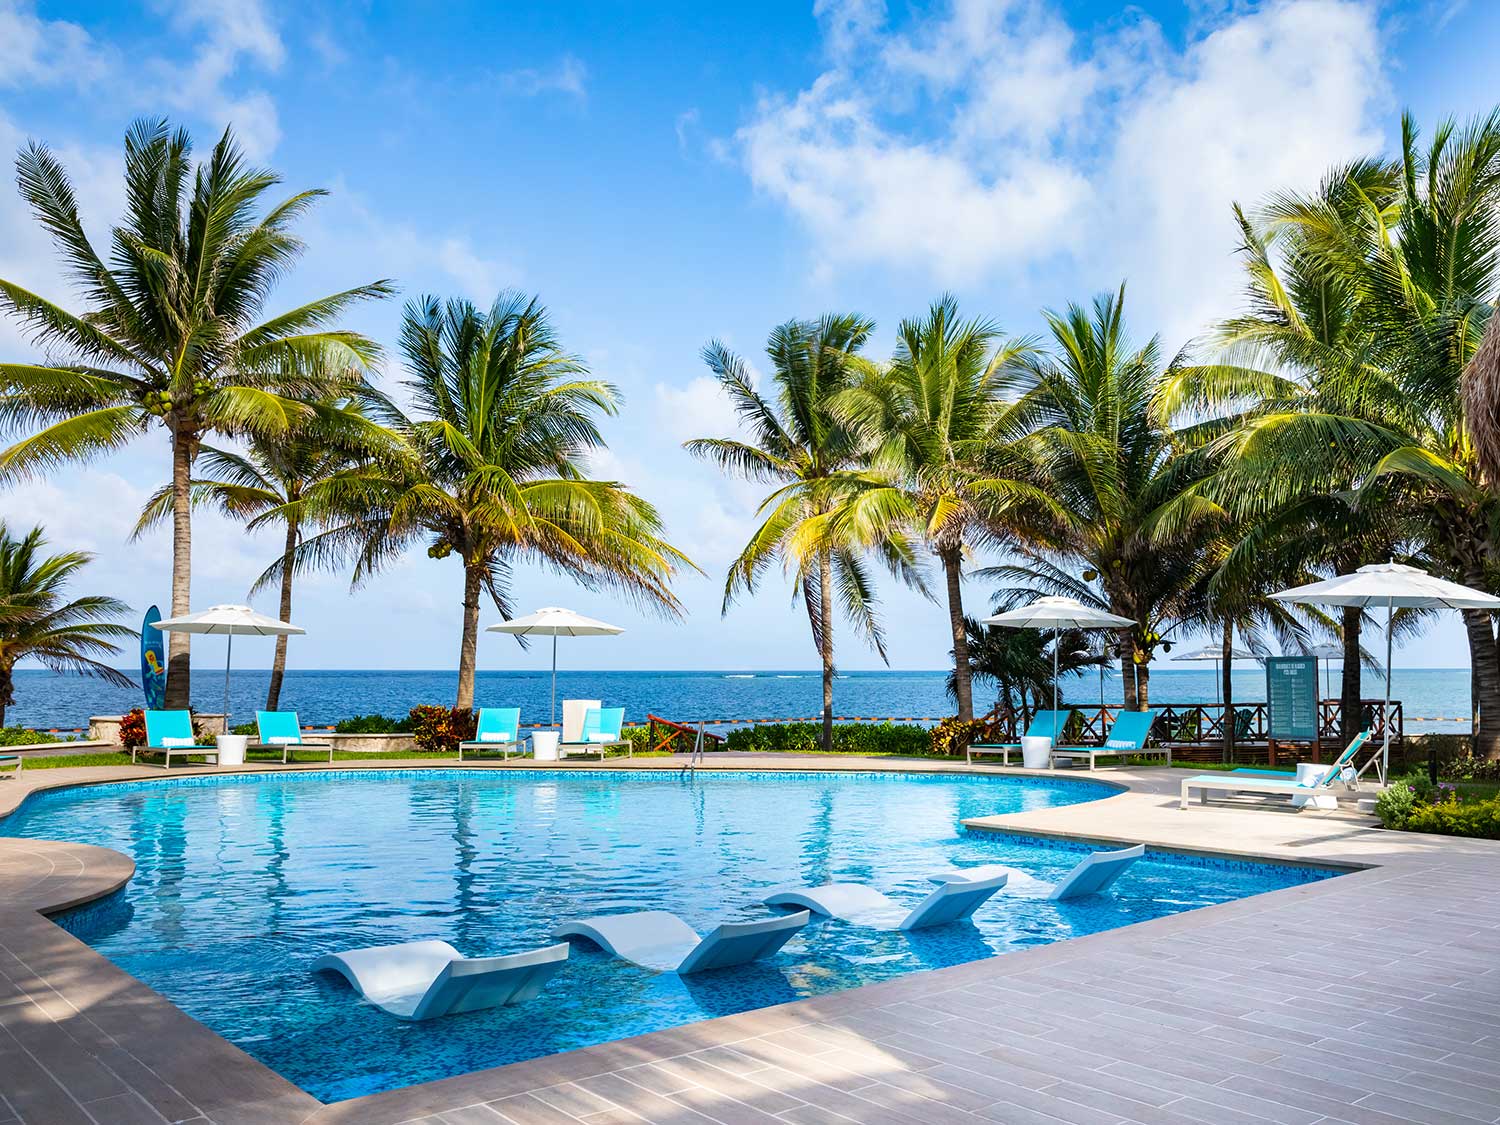 Margaritaville Island Reserve Riviera Cancun pool